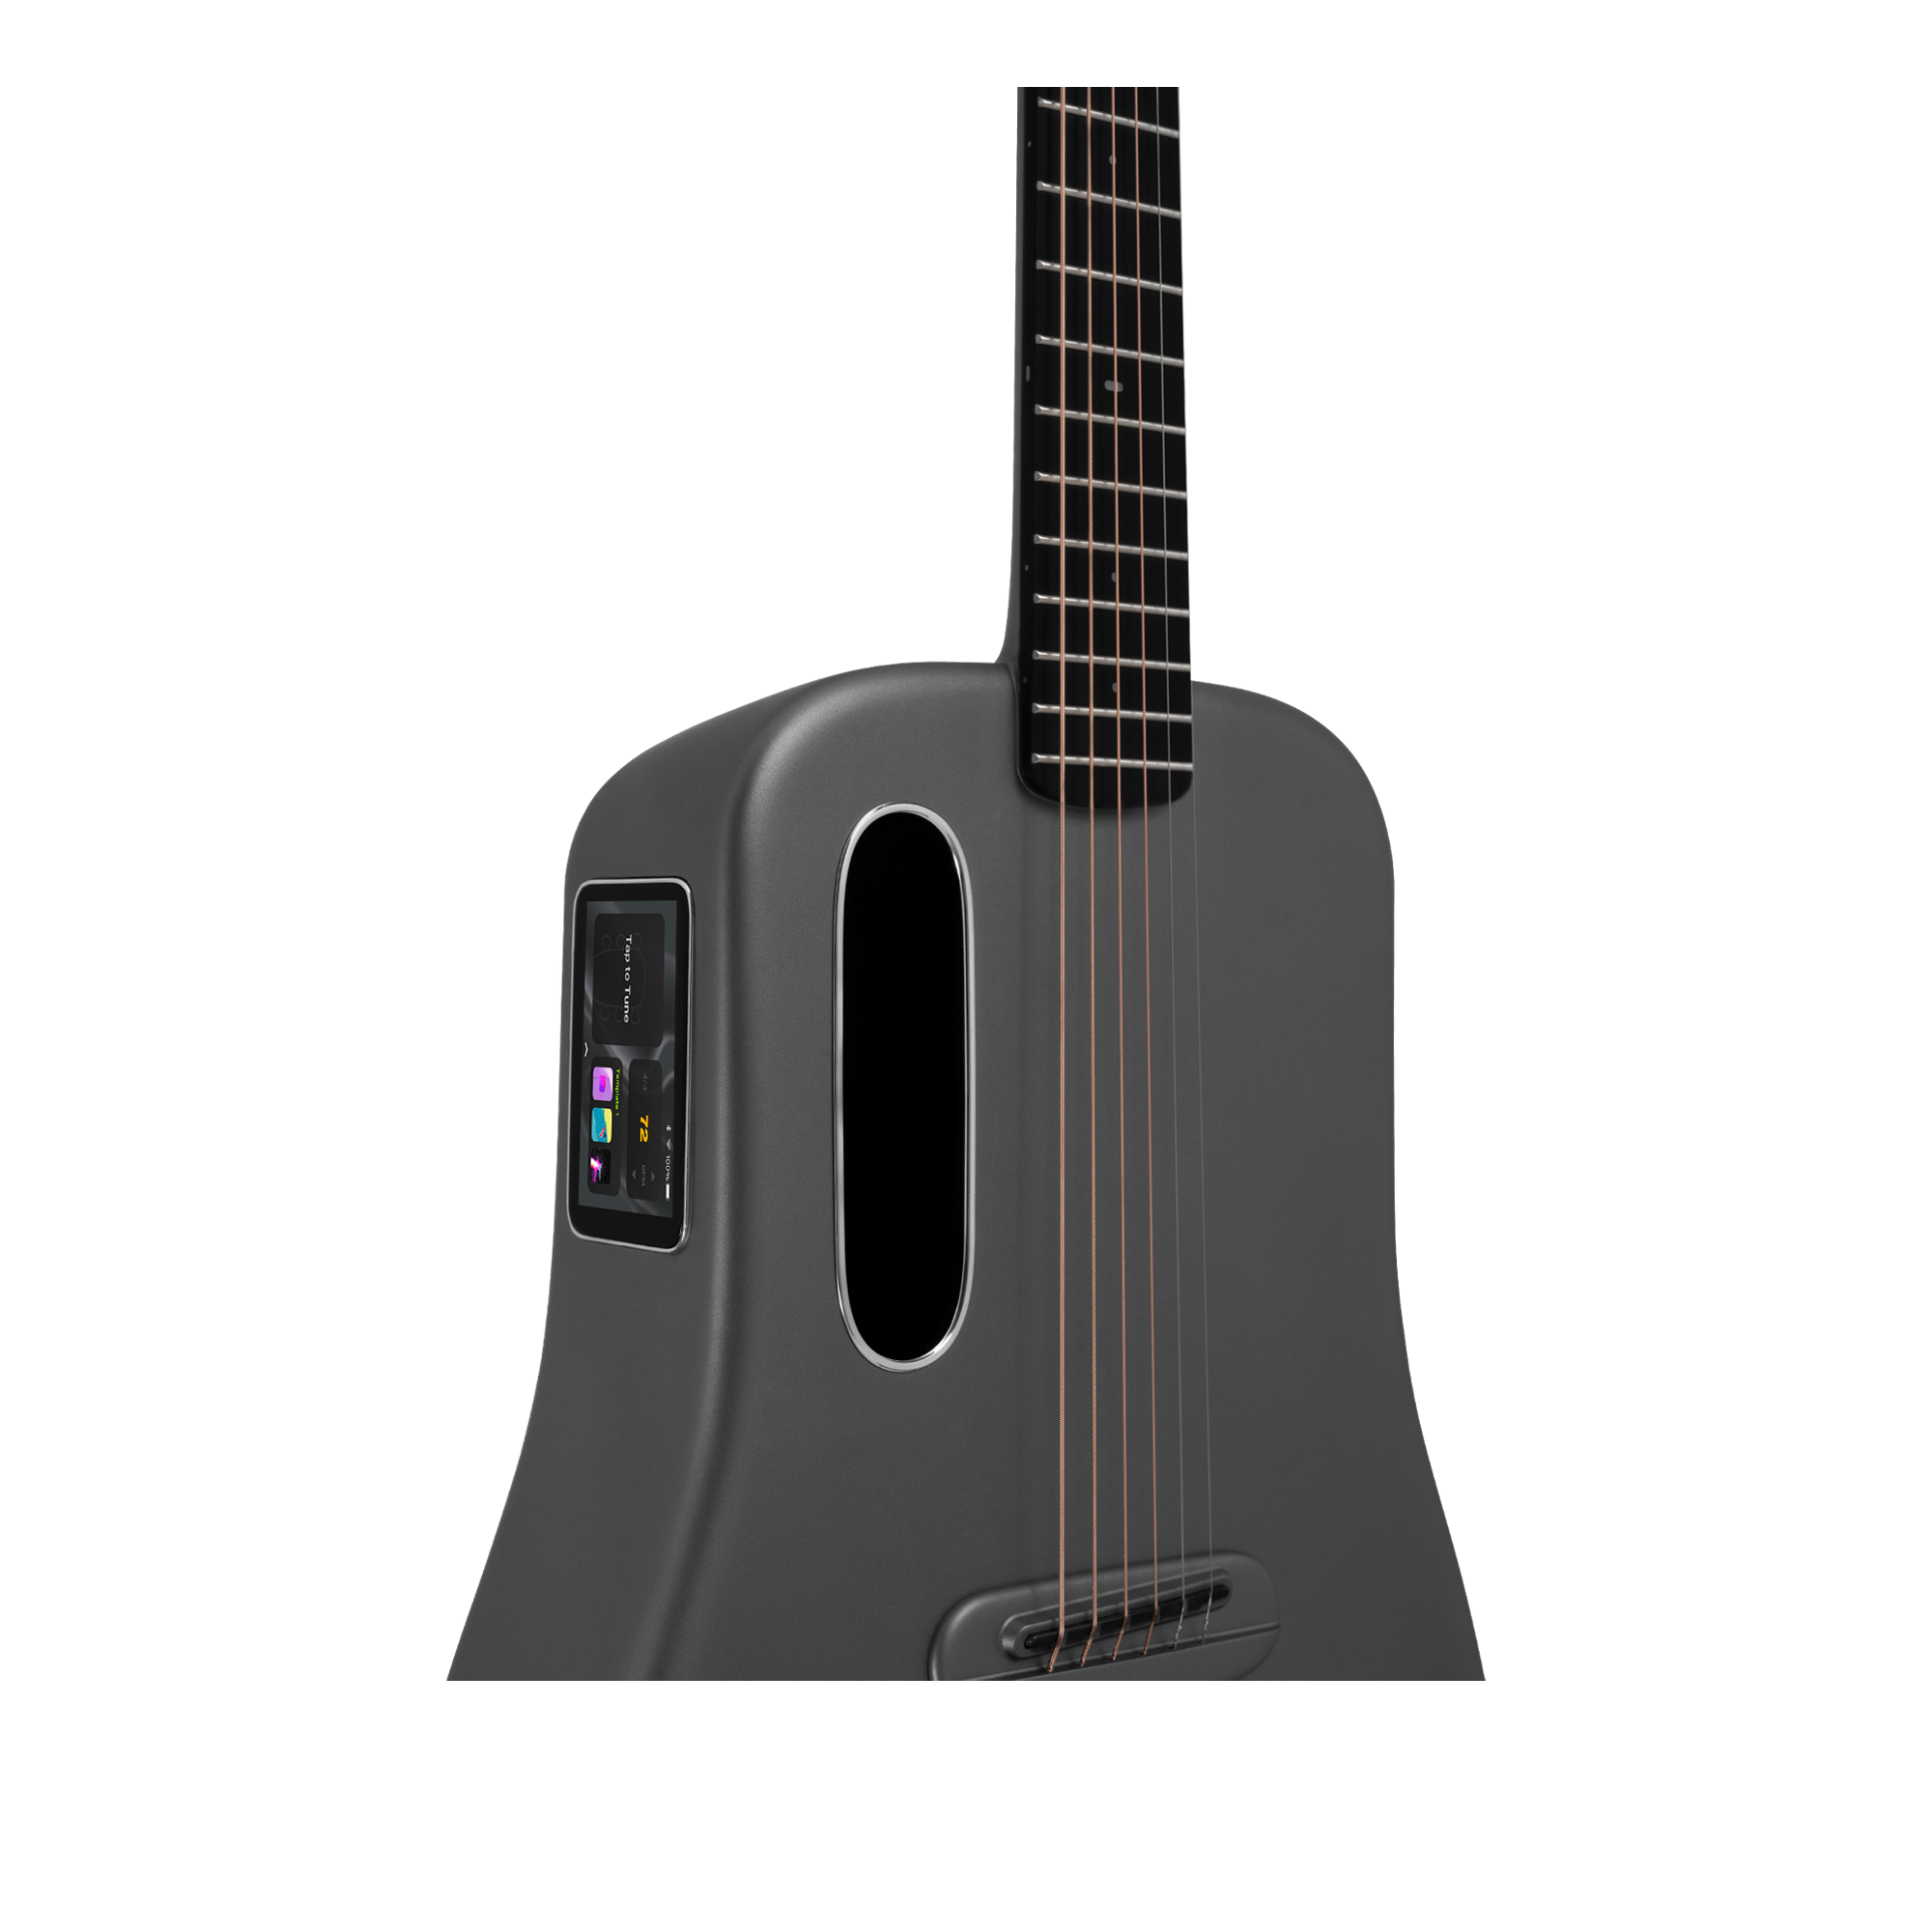 Lava Me 3 36inch Carbon Fiber Smart Guitar with Ideal Bag - Gray